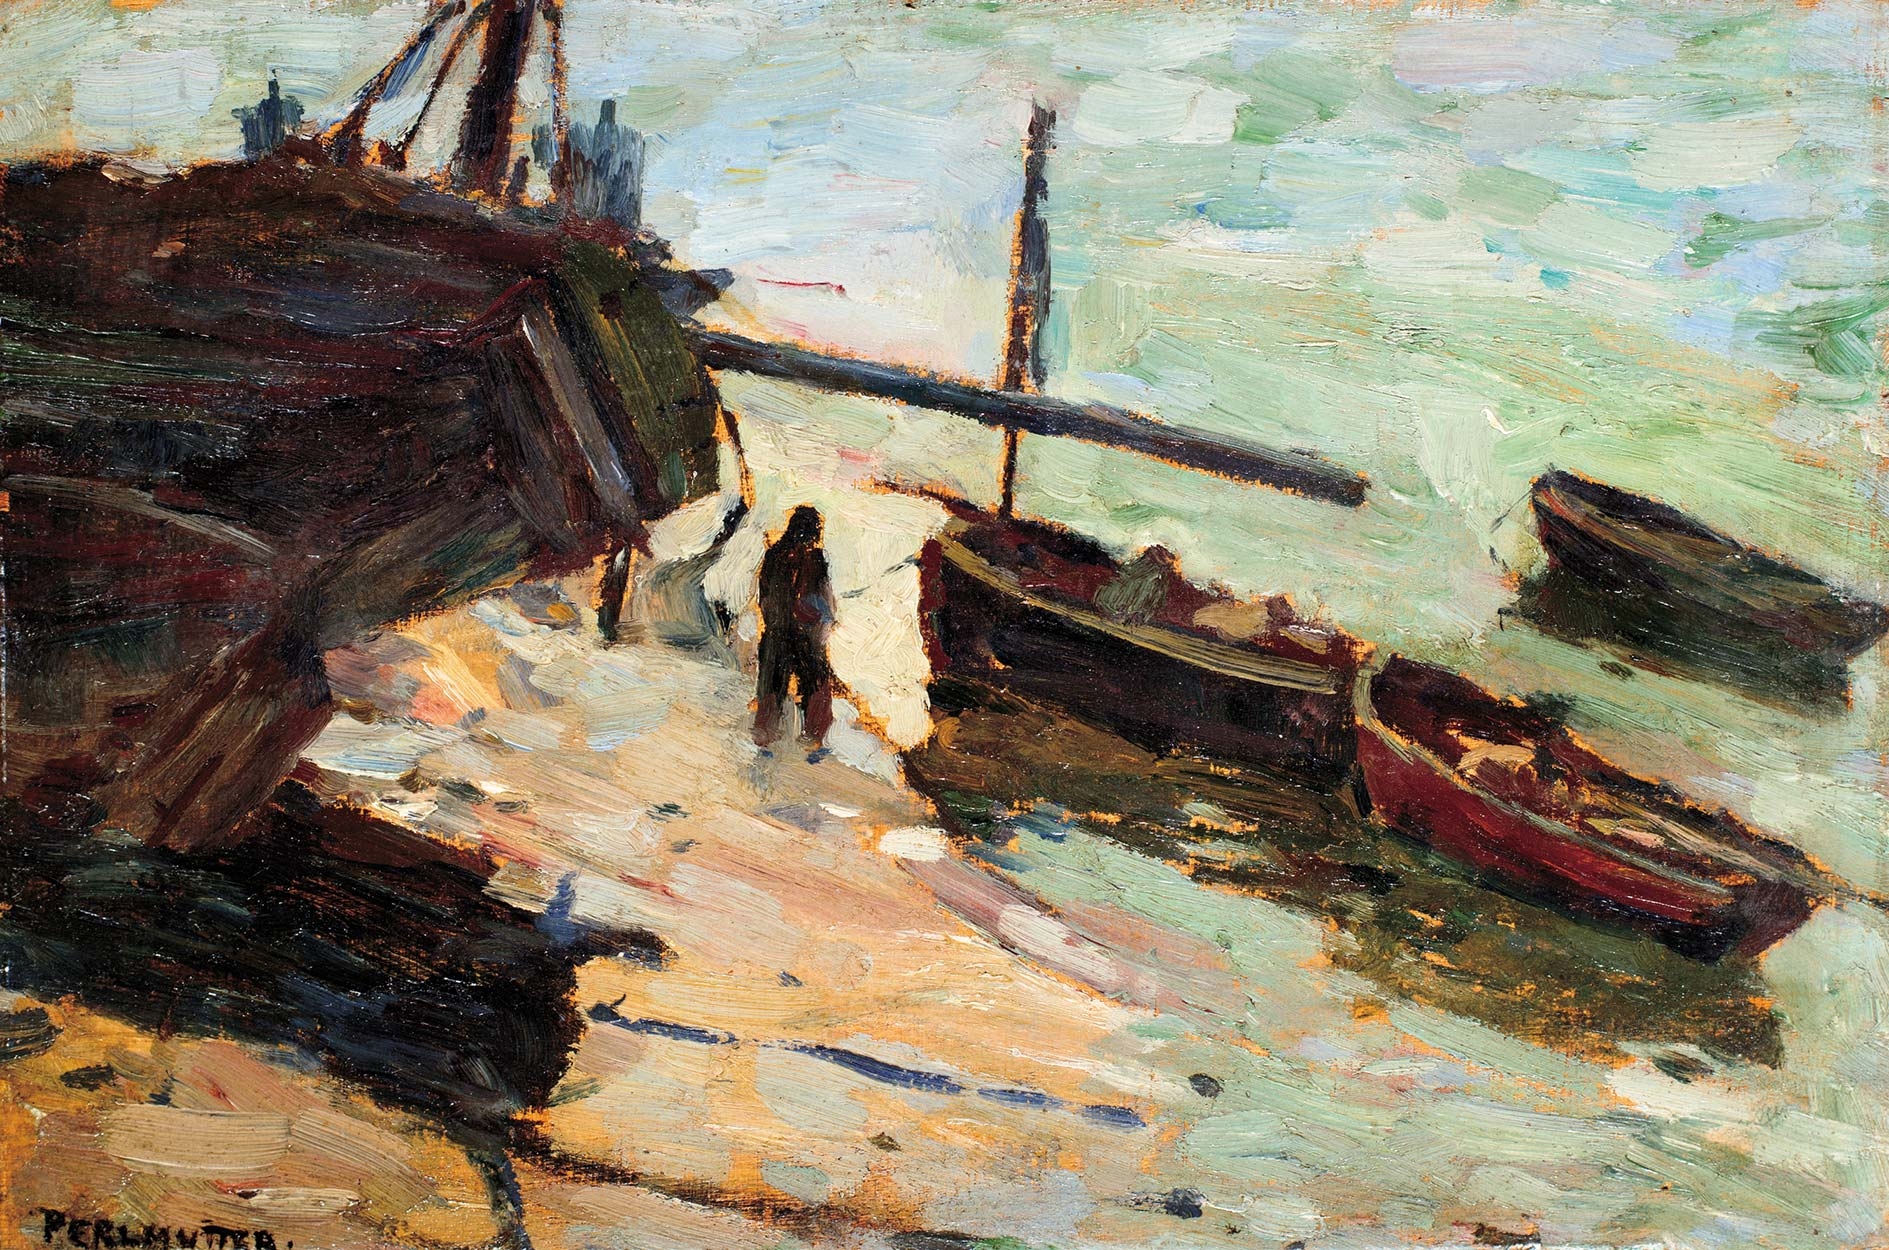 Perlmutter Izsák (1866-1932) Among boats, 1898